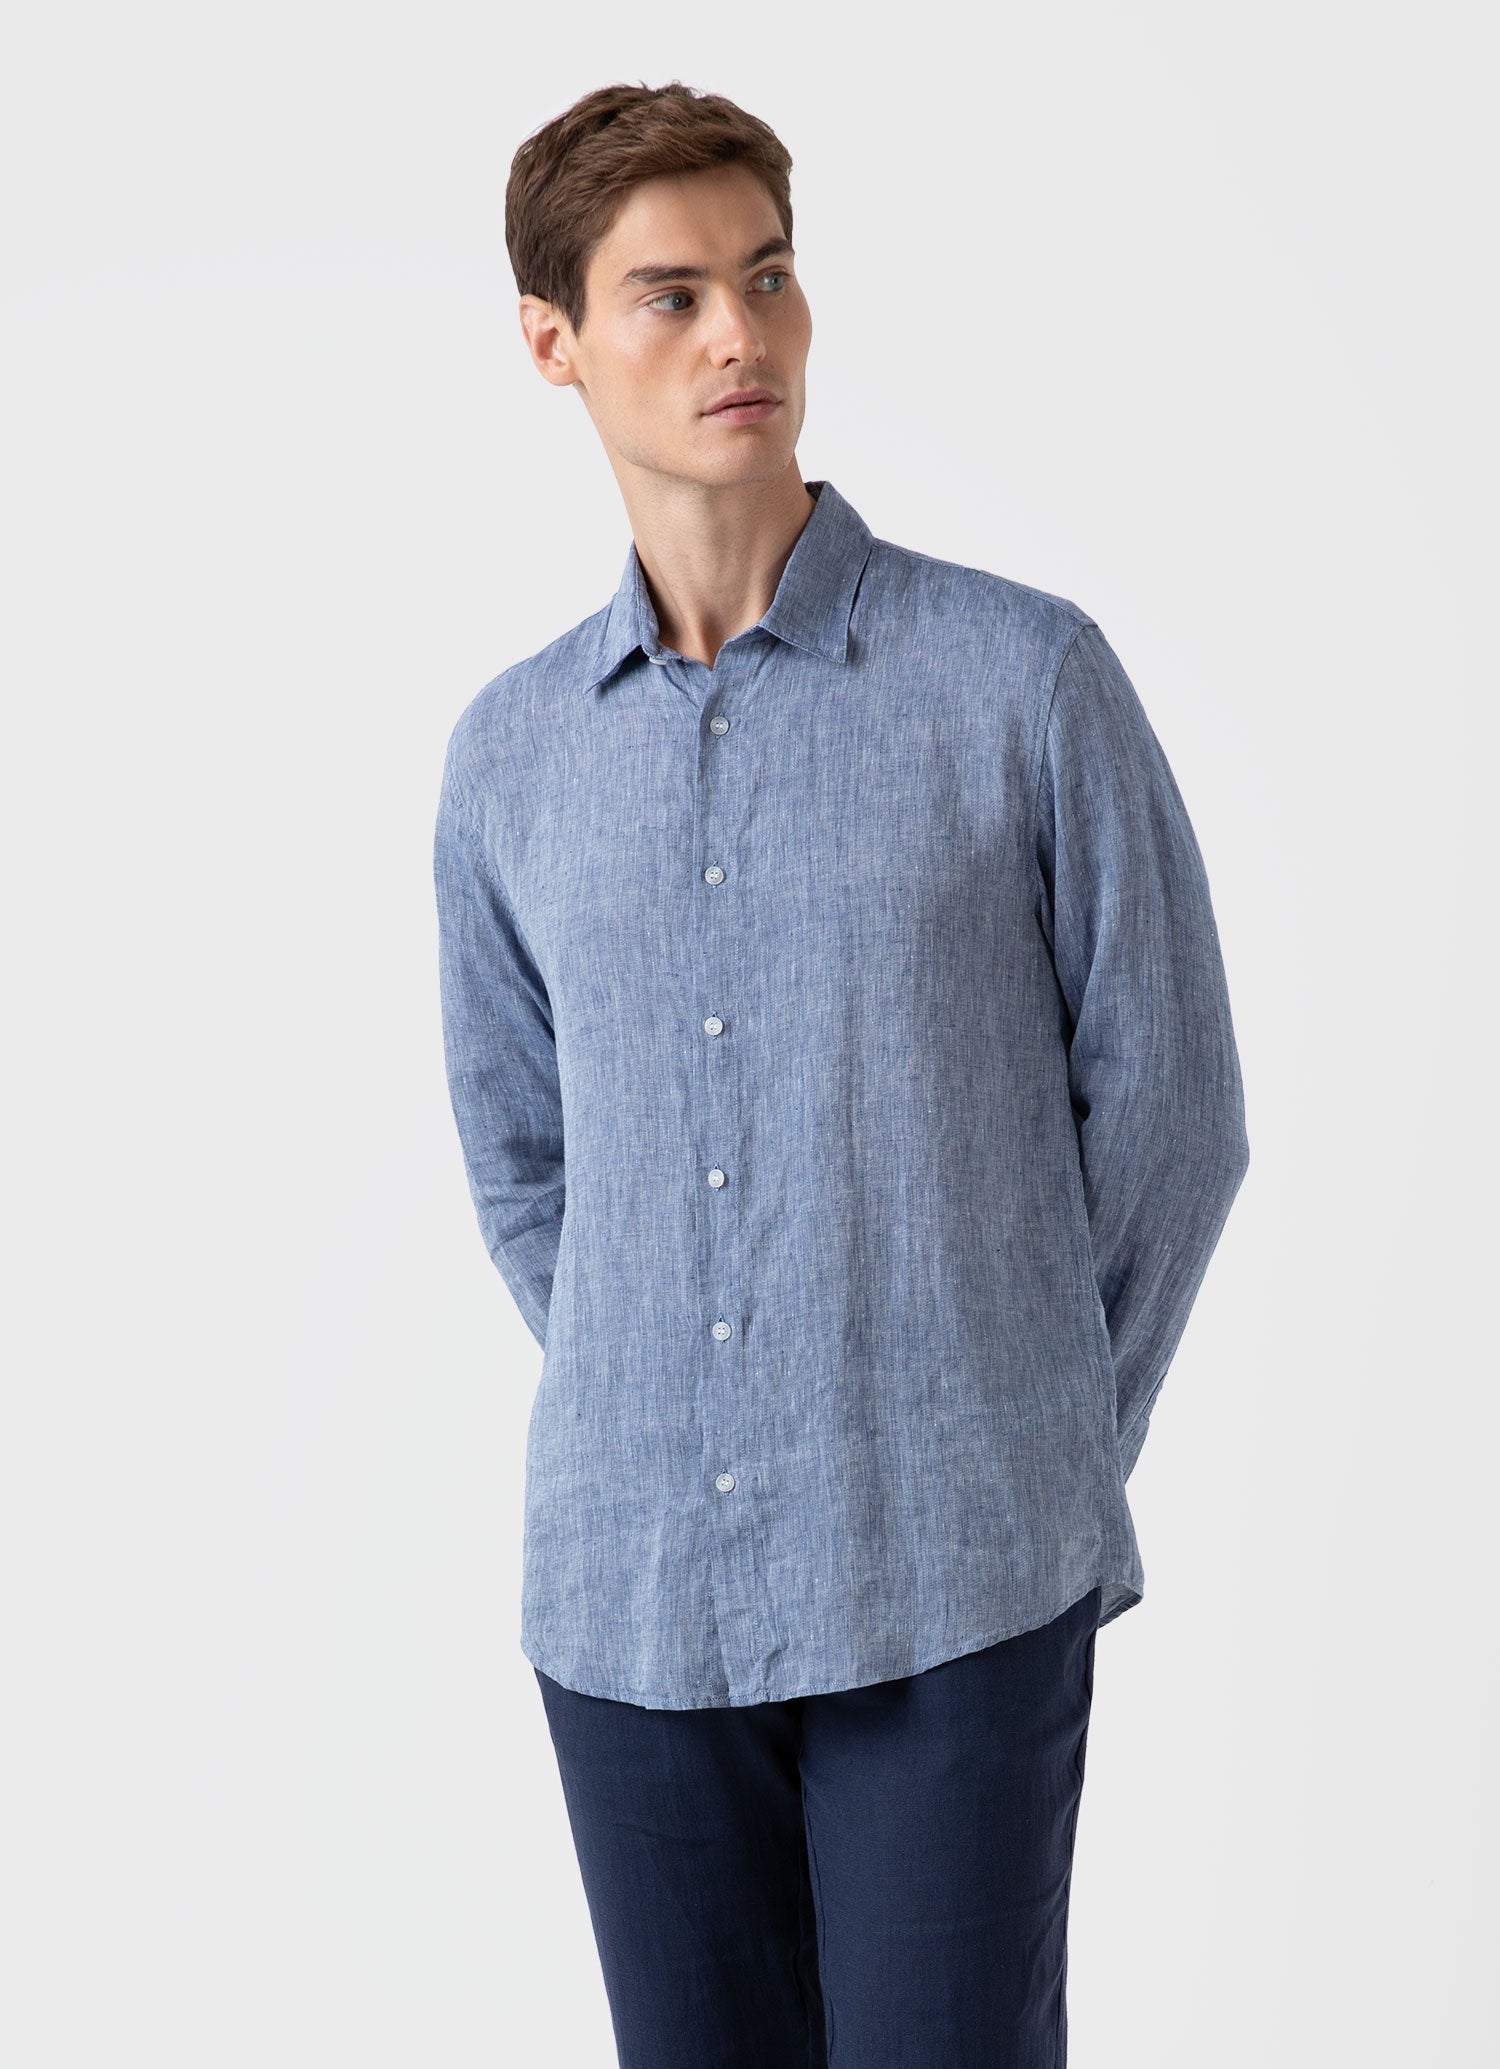 Men's Linen Shirt in Bluestone Melange | Sunspel